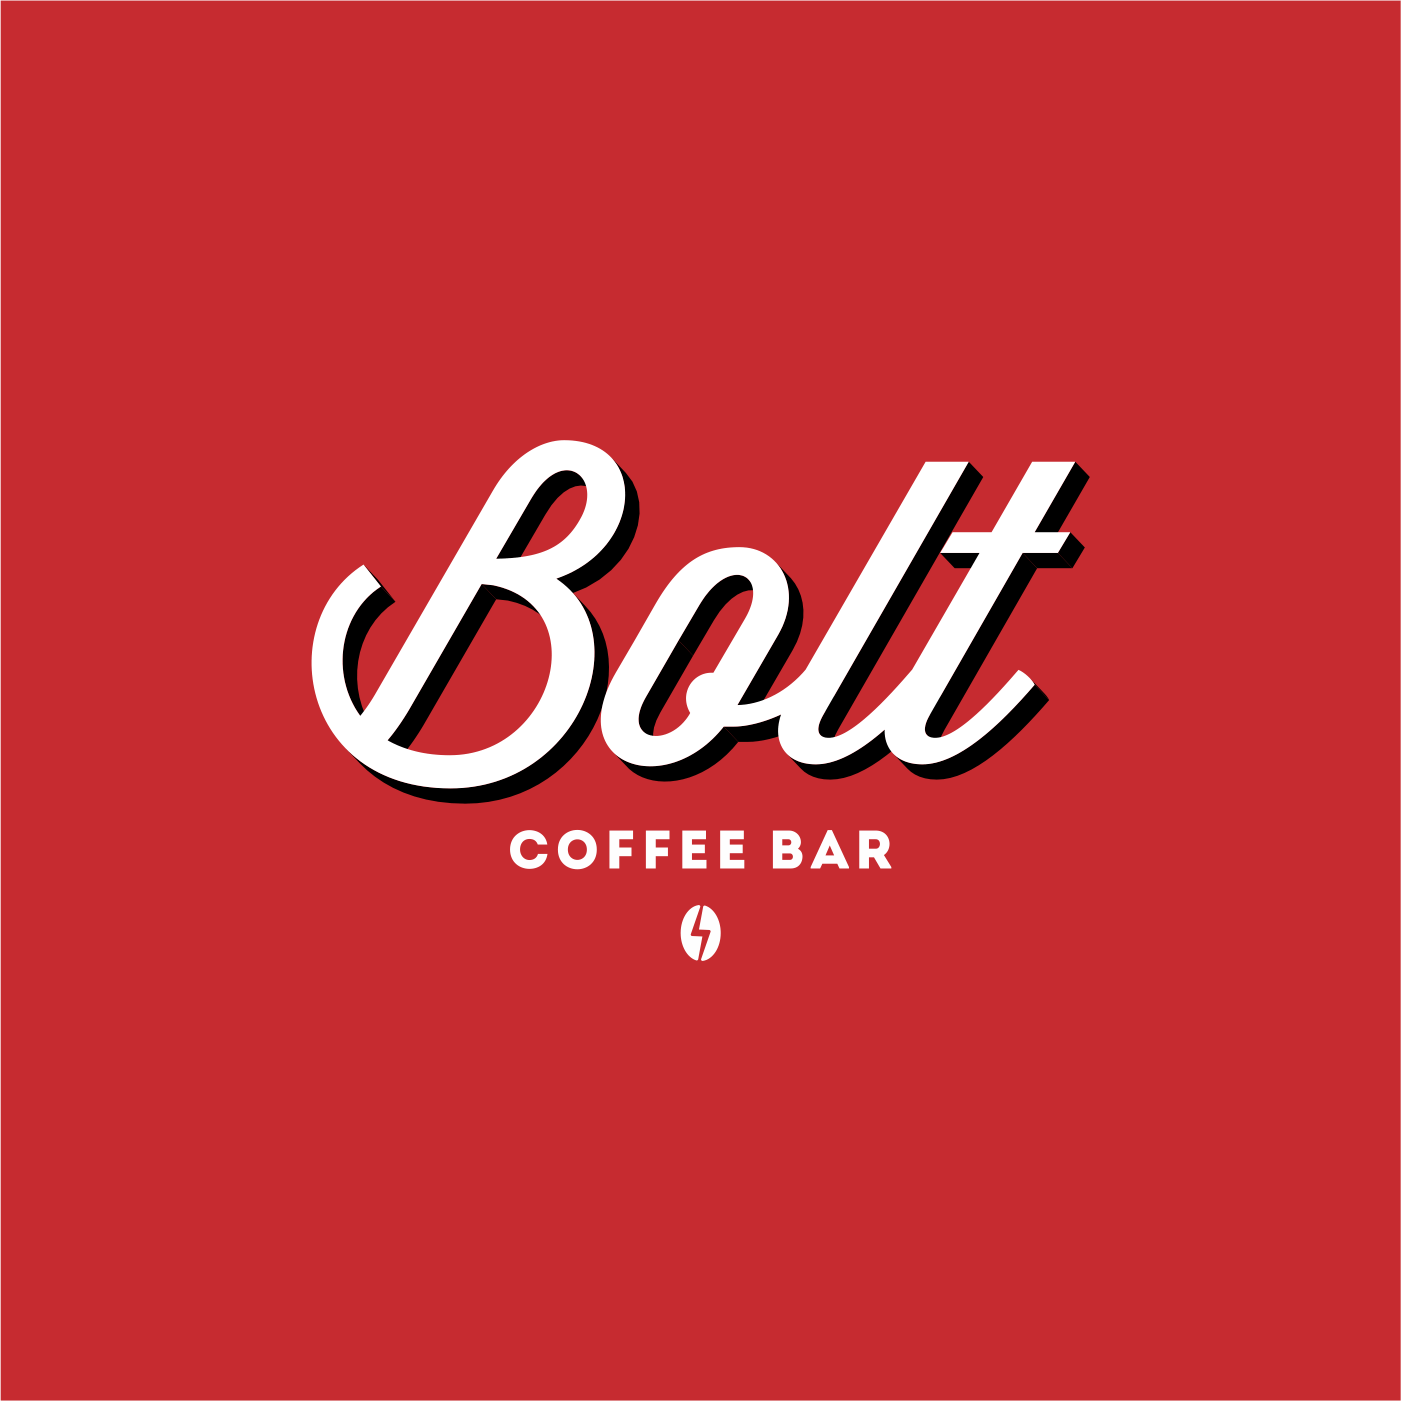 Gree Logo - Upmarket, Bold, Coffee Shop Logo Design for Bolt Coffee Bar